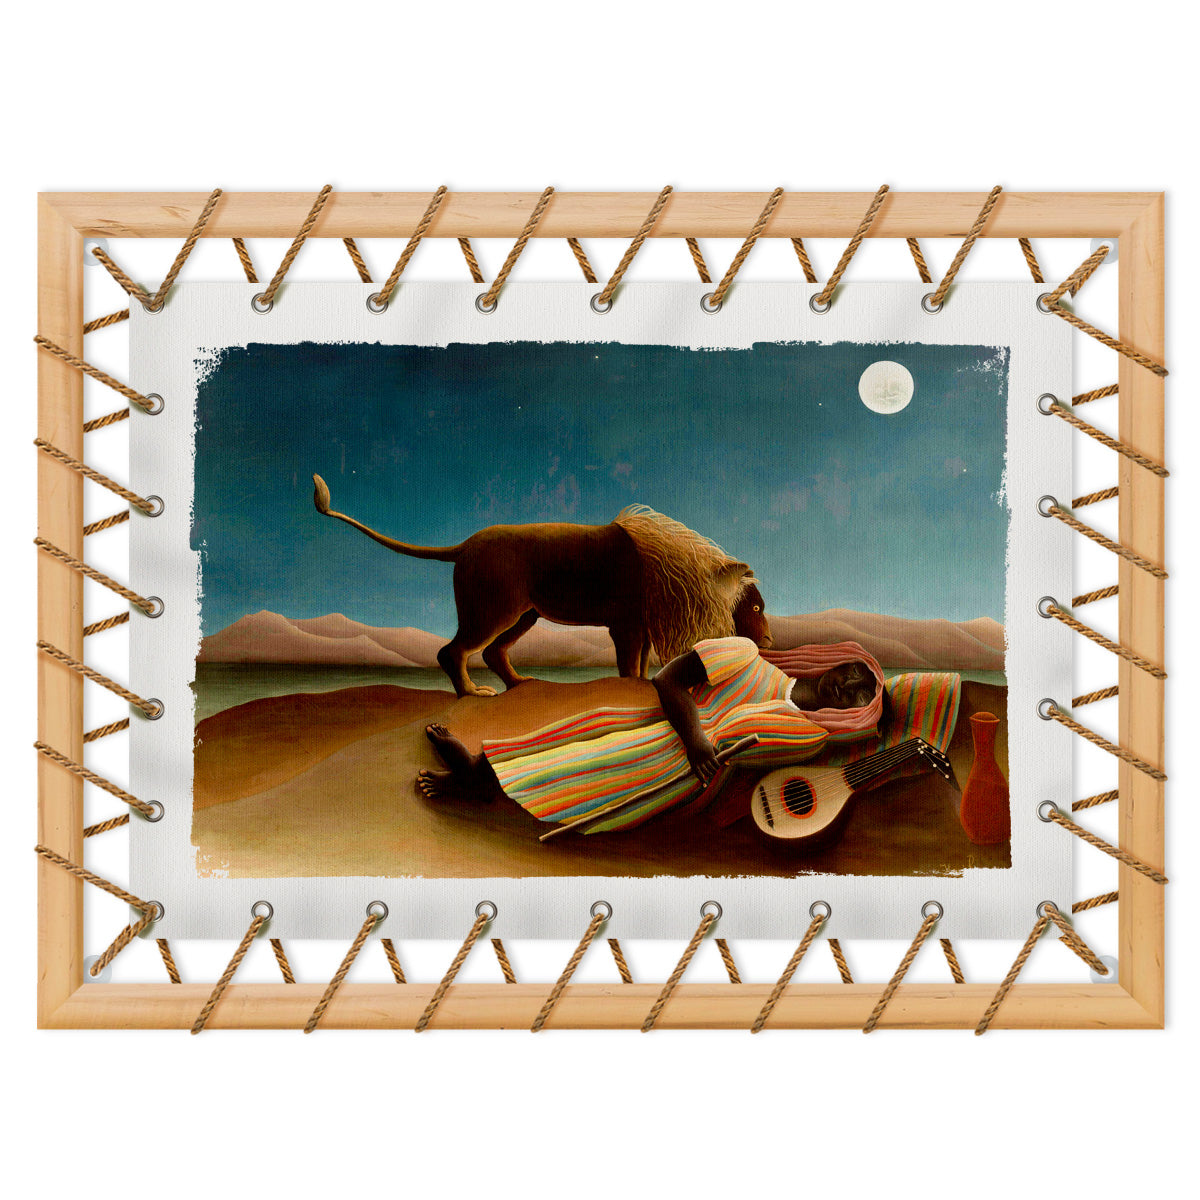 Tensotela 70x95 cm - Rousseau The Dream - PlastiWood(14558300)